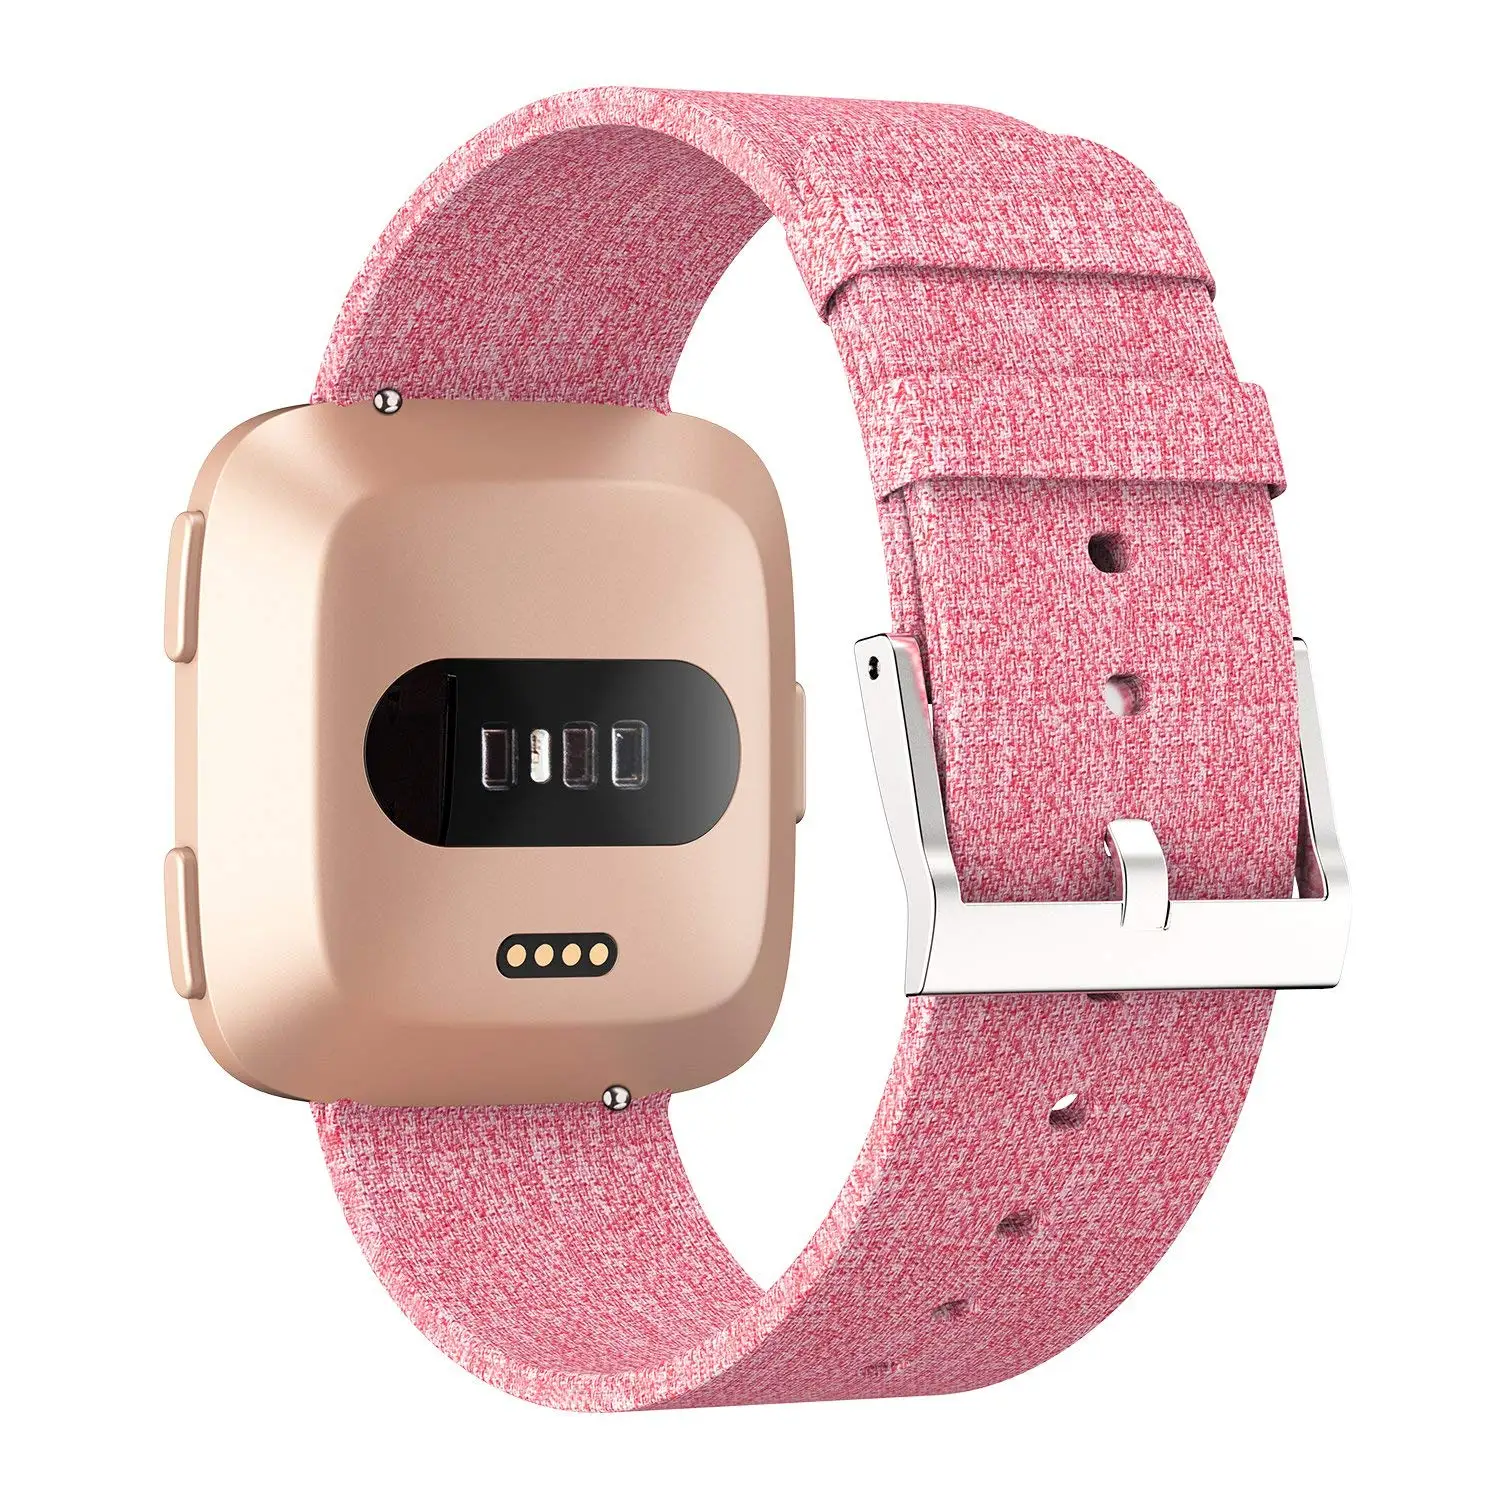 Fashion Woven Fabric Watch Strap Band for Xiaomi Huami Amazfit Strato Sports Watch 2 Smart Watch Nylon Wrist band strap 22mm